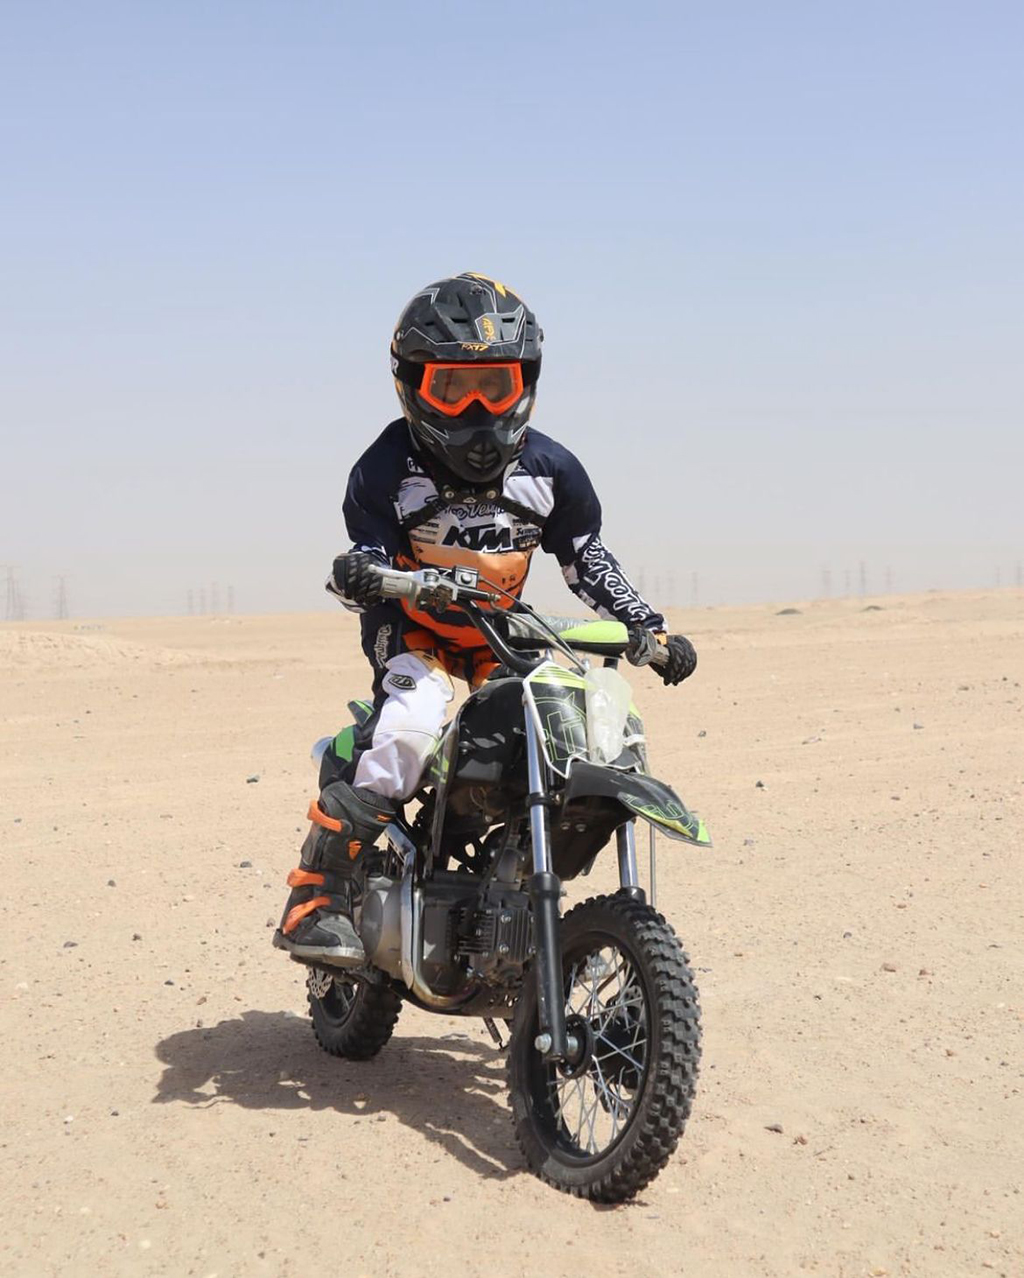 Meet Thunayyan Al-Buloshi, Kuwait's young and aspiring motocross rider